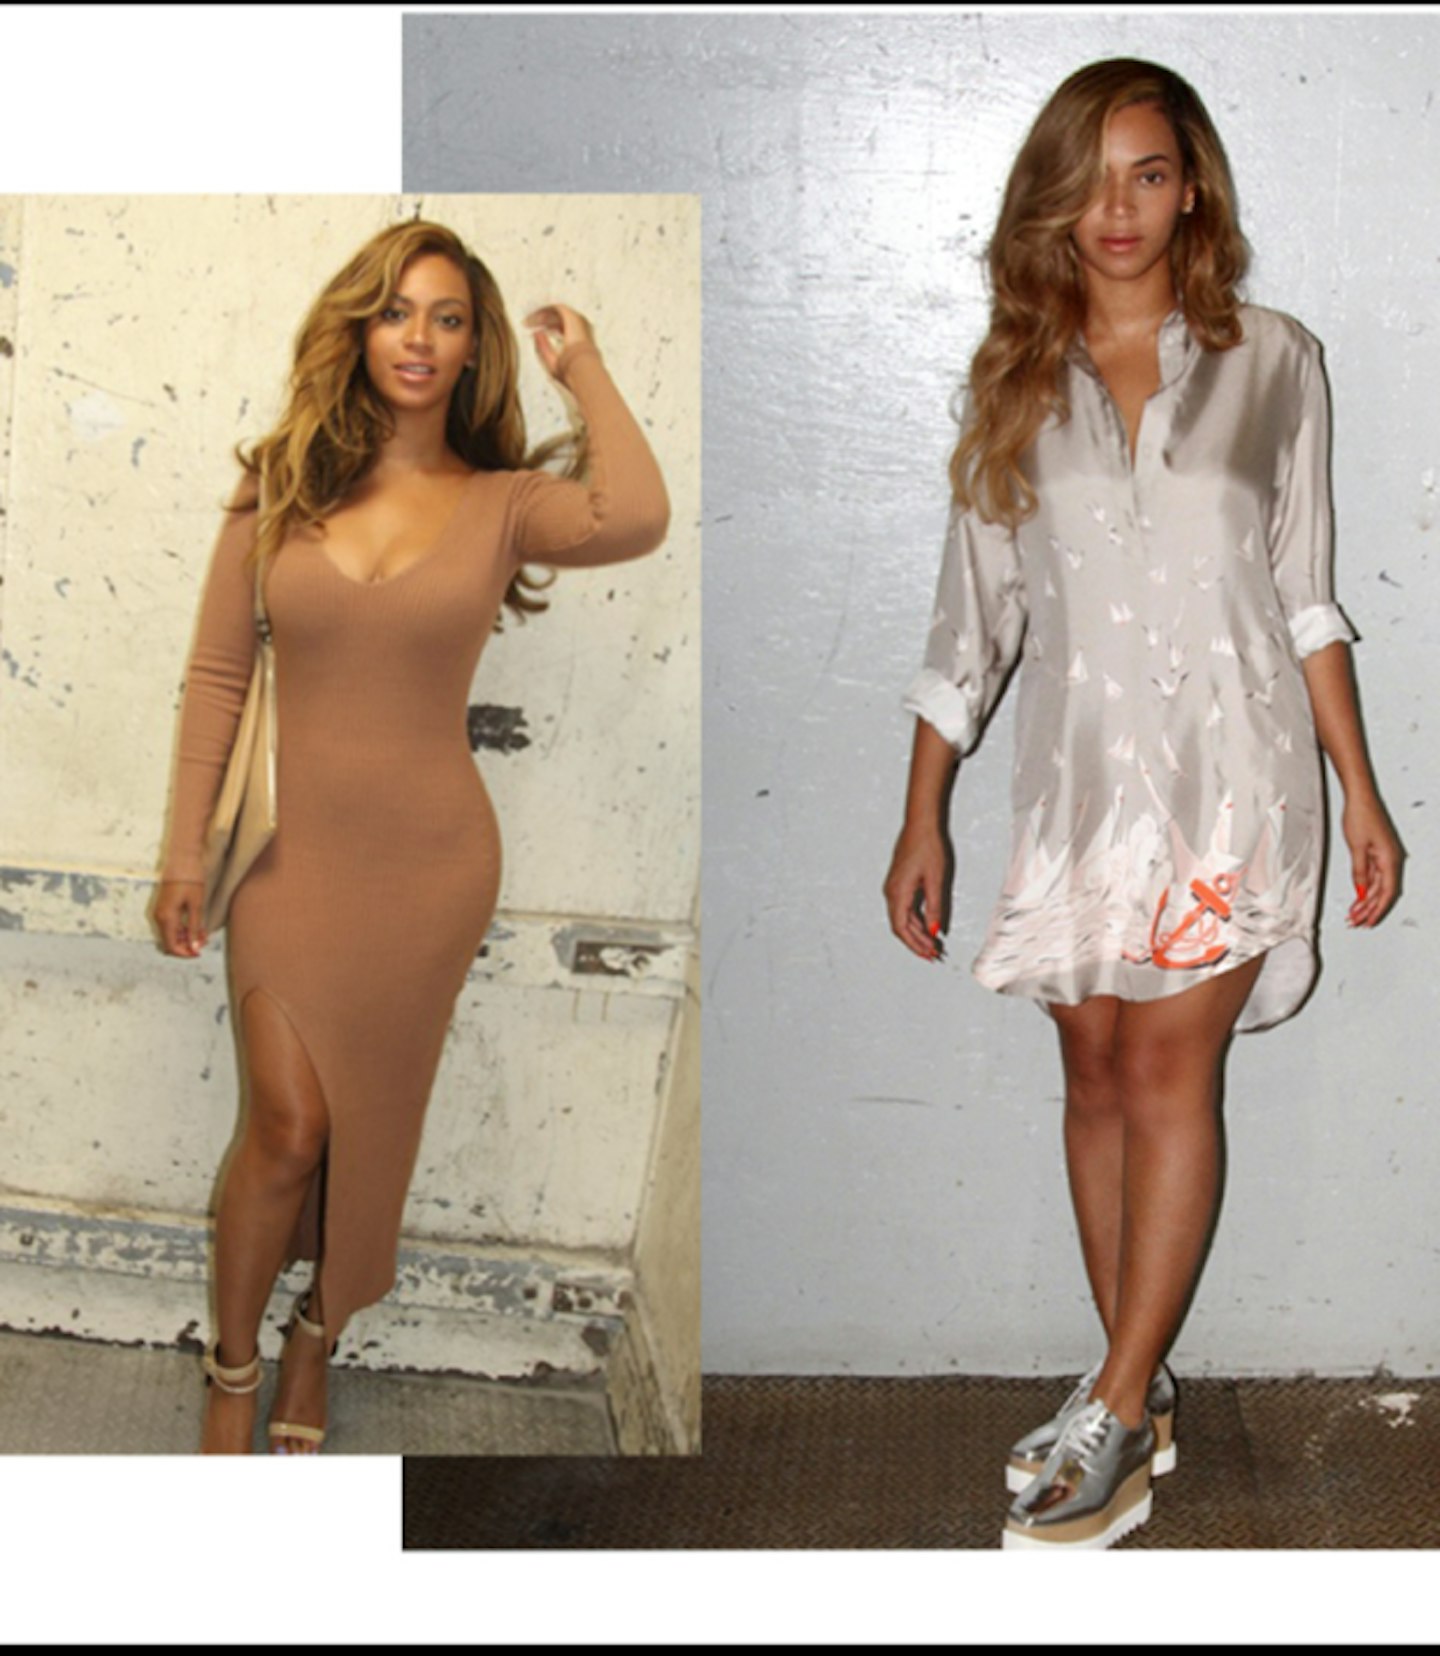 Wednesday: Beyonce